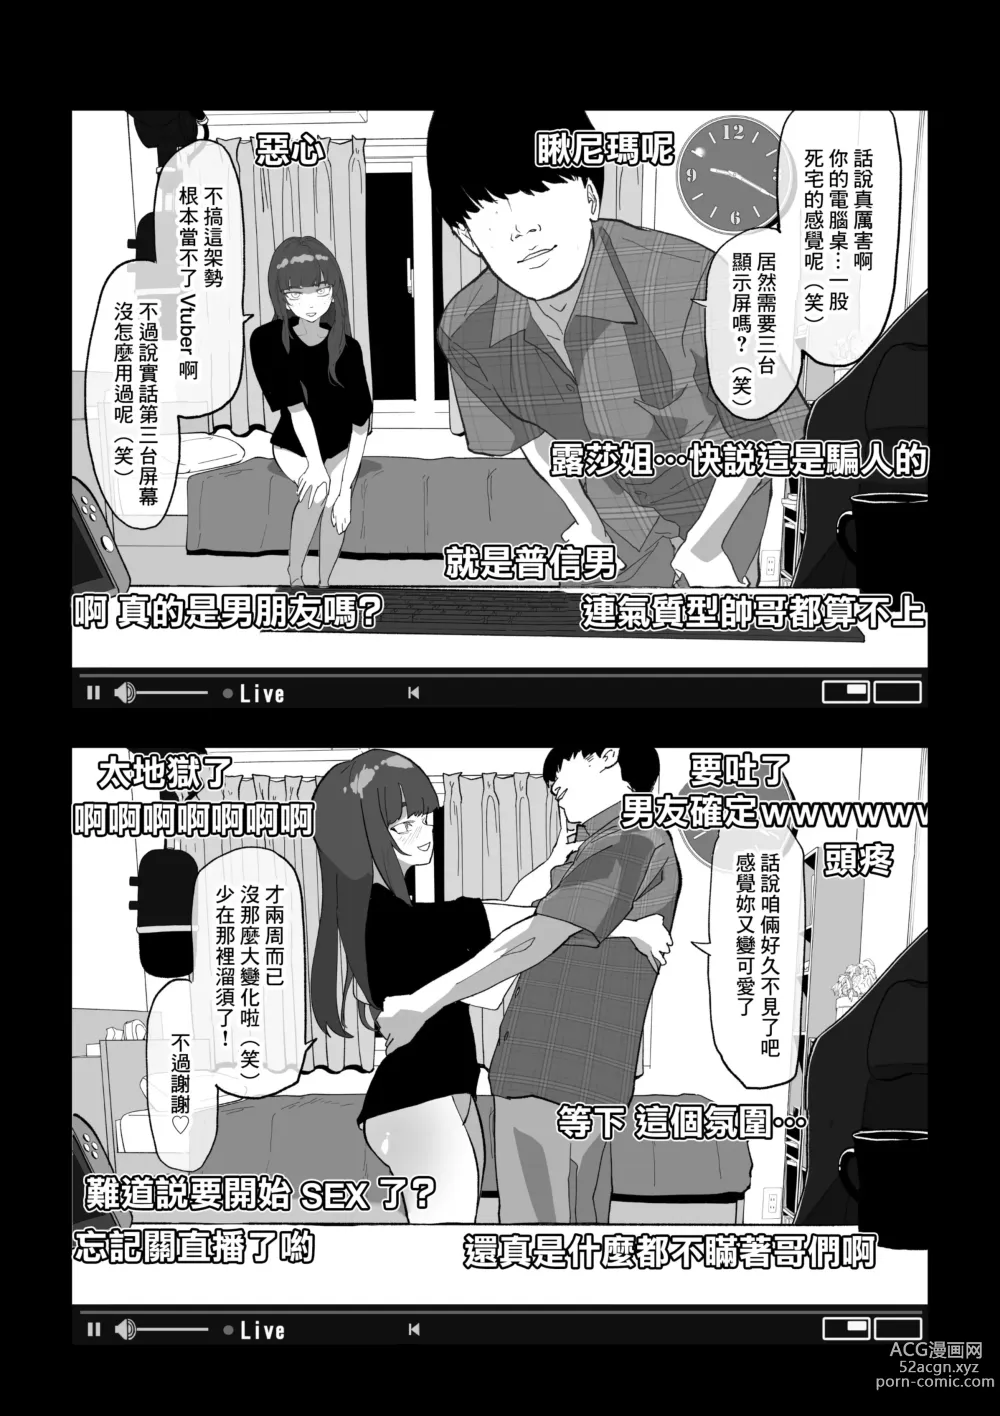 Page 9 of doujinshi 忘關攝像頭後SEX直播少女